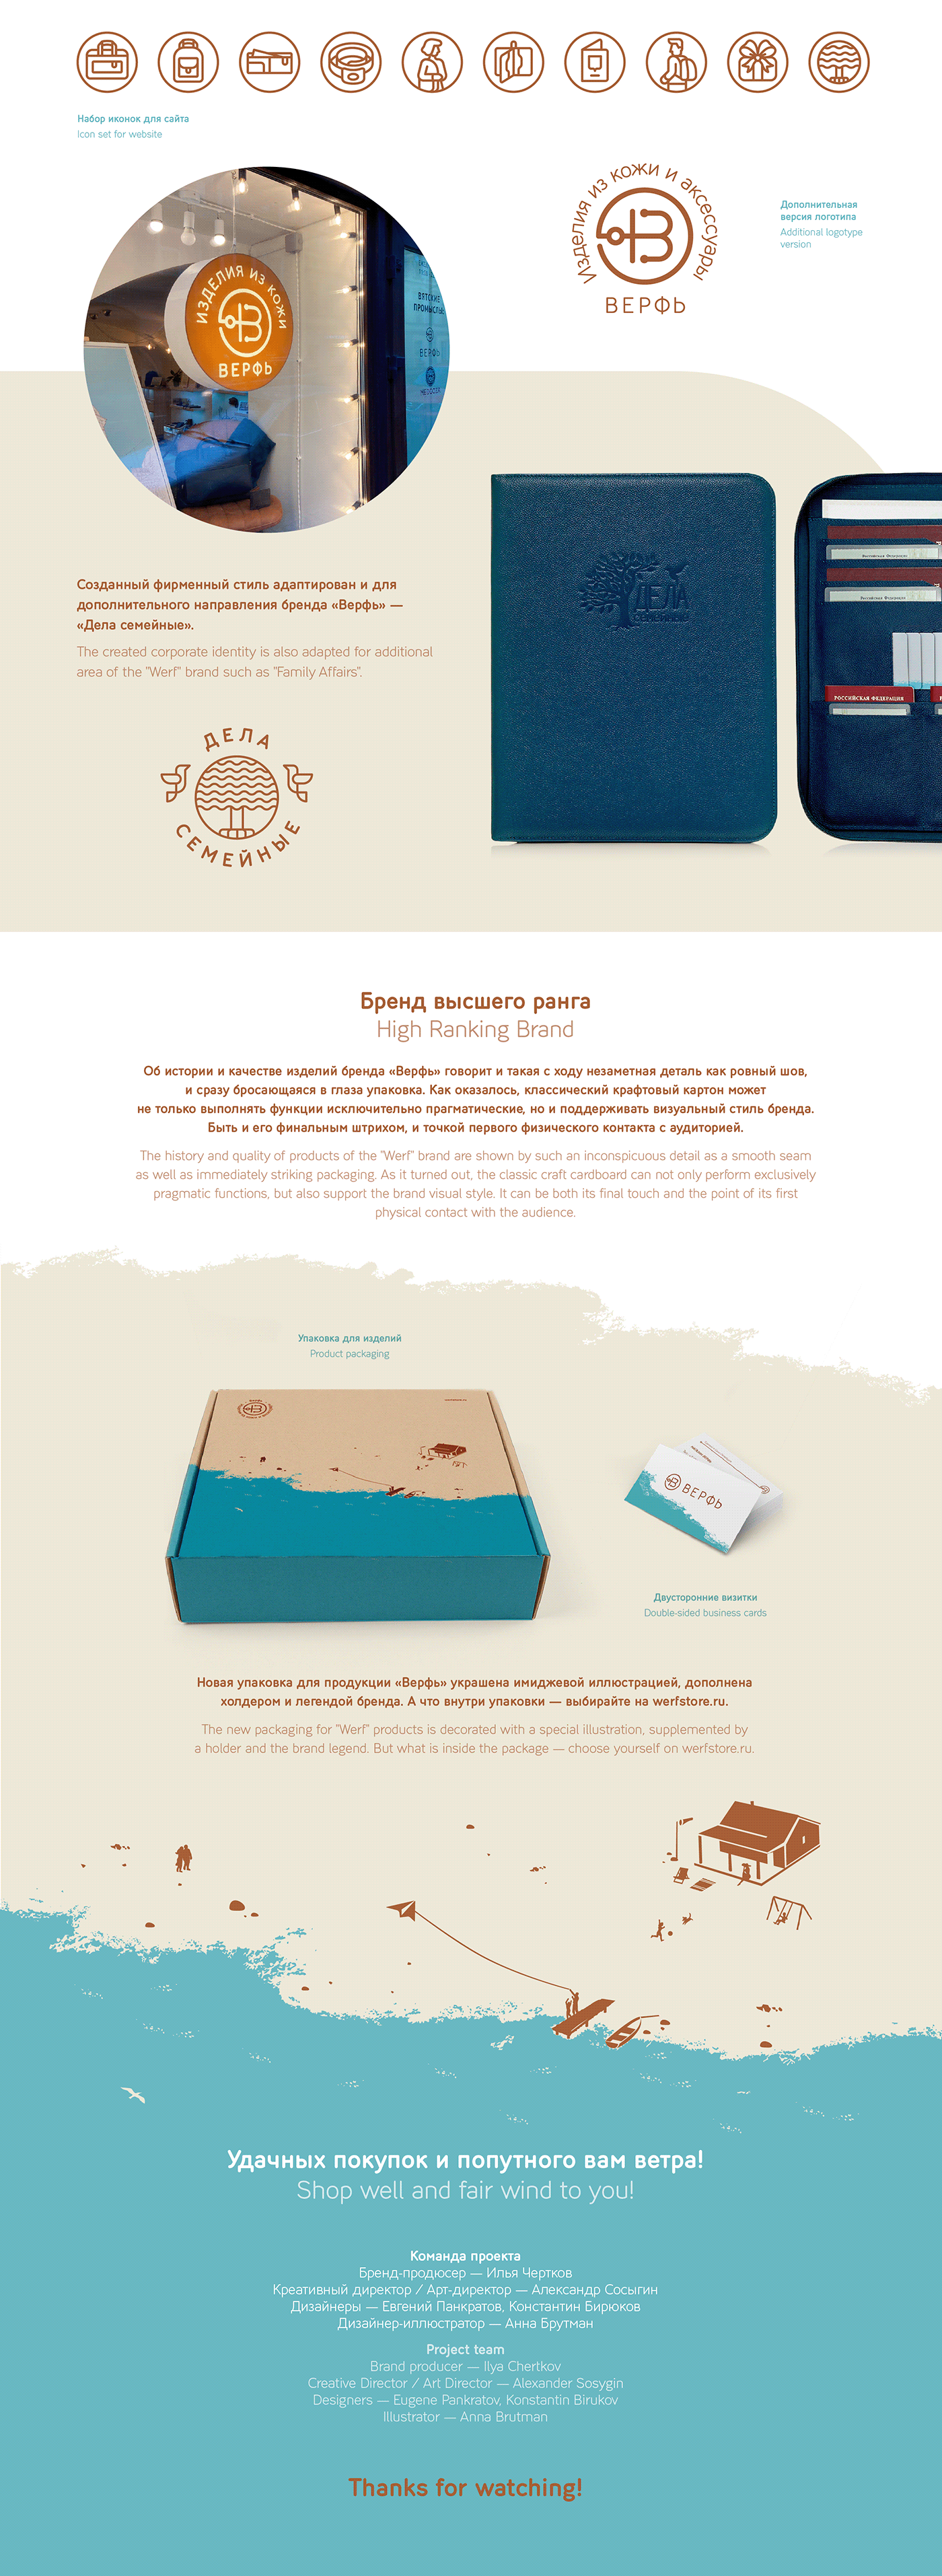 leather goods marine style packaging design werfstore.ru брендинг Верфь дизайн упаковки иллюстрация Кожаные аксессуары рестайлинг логотипа